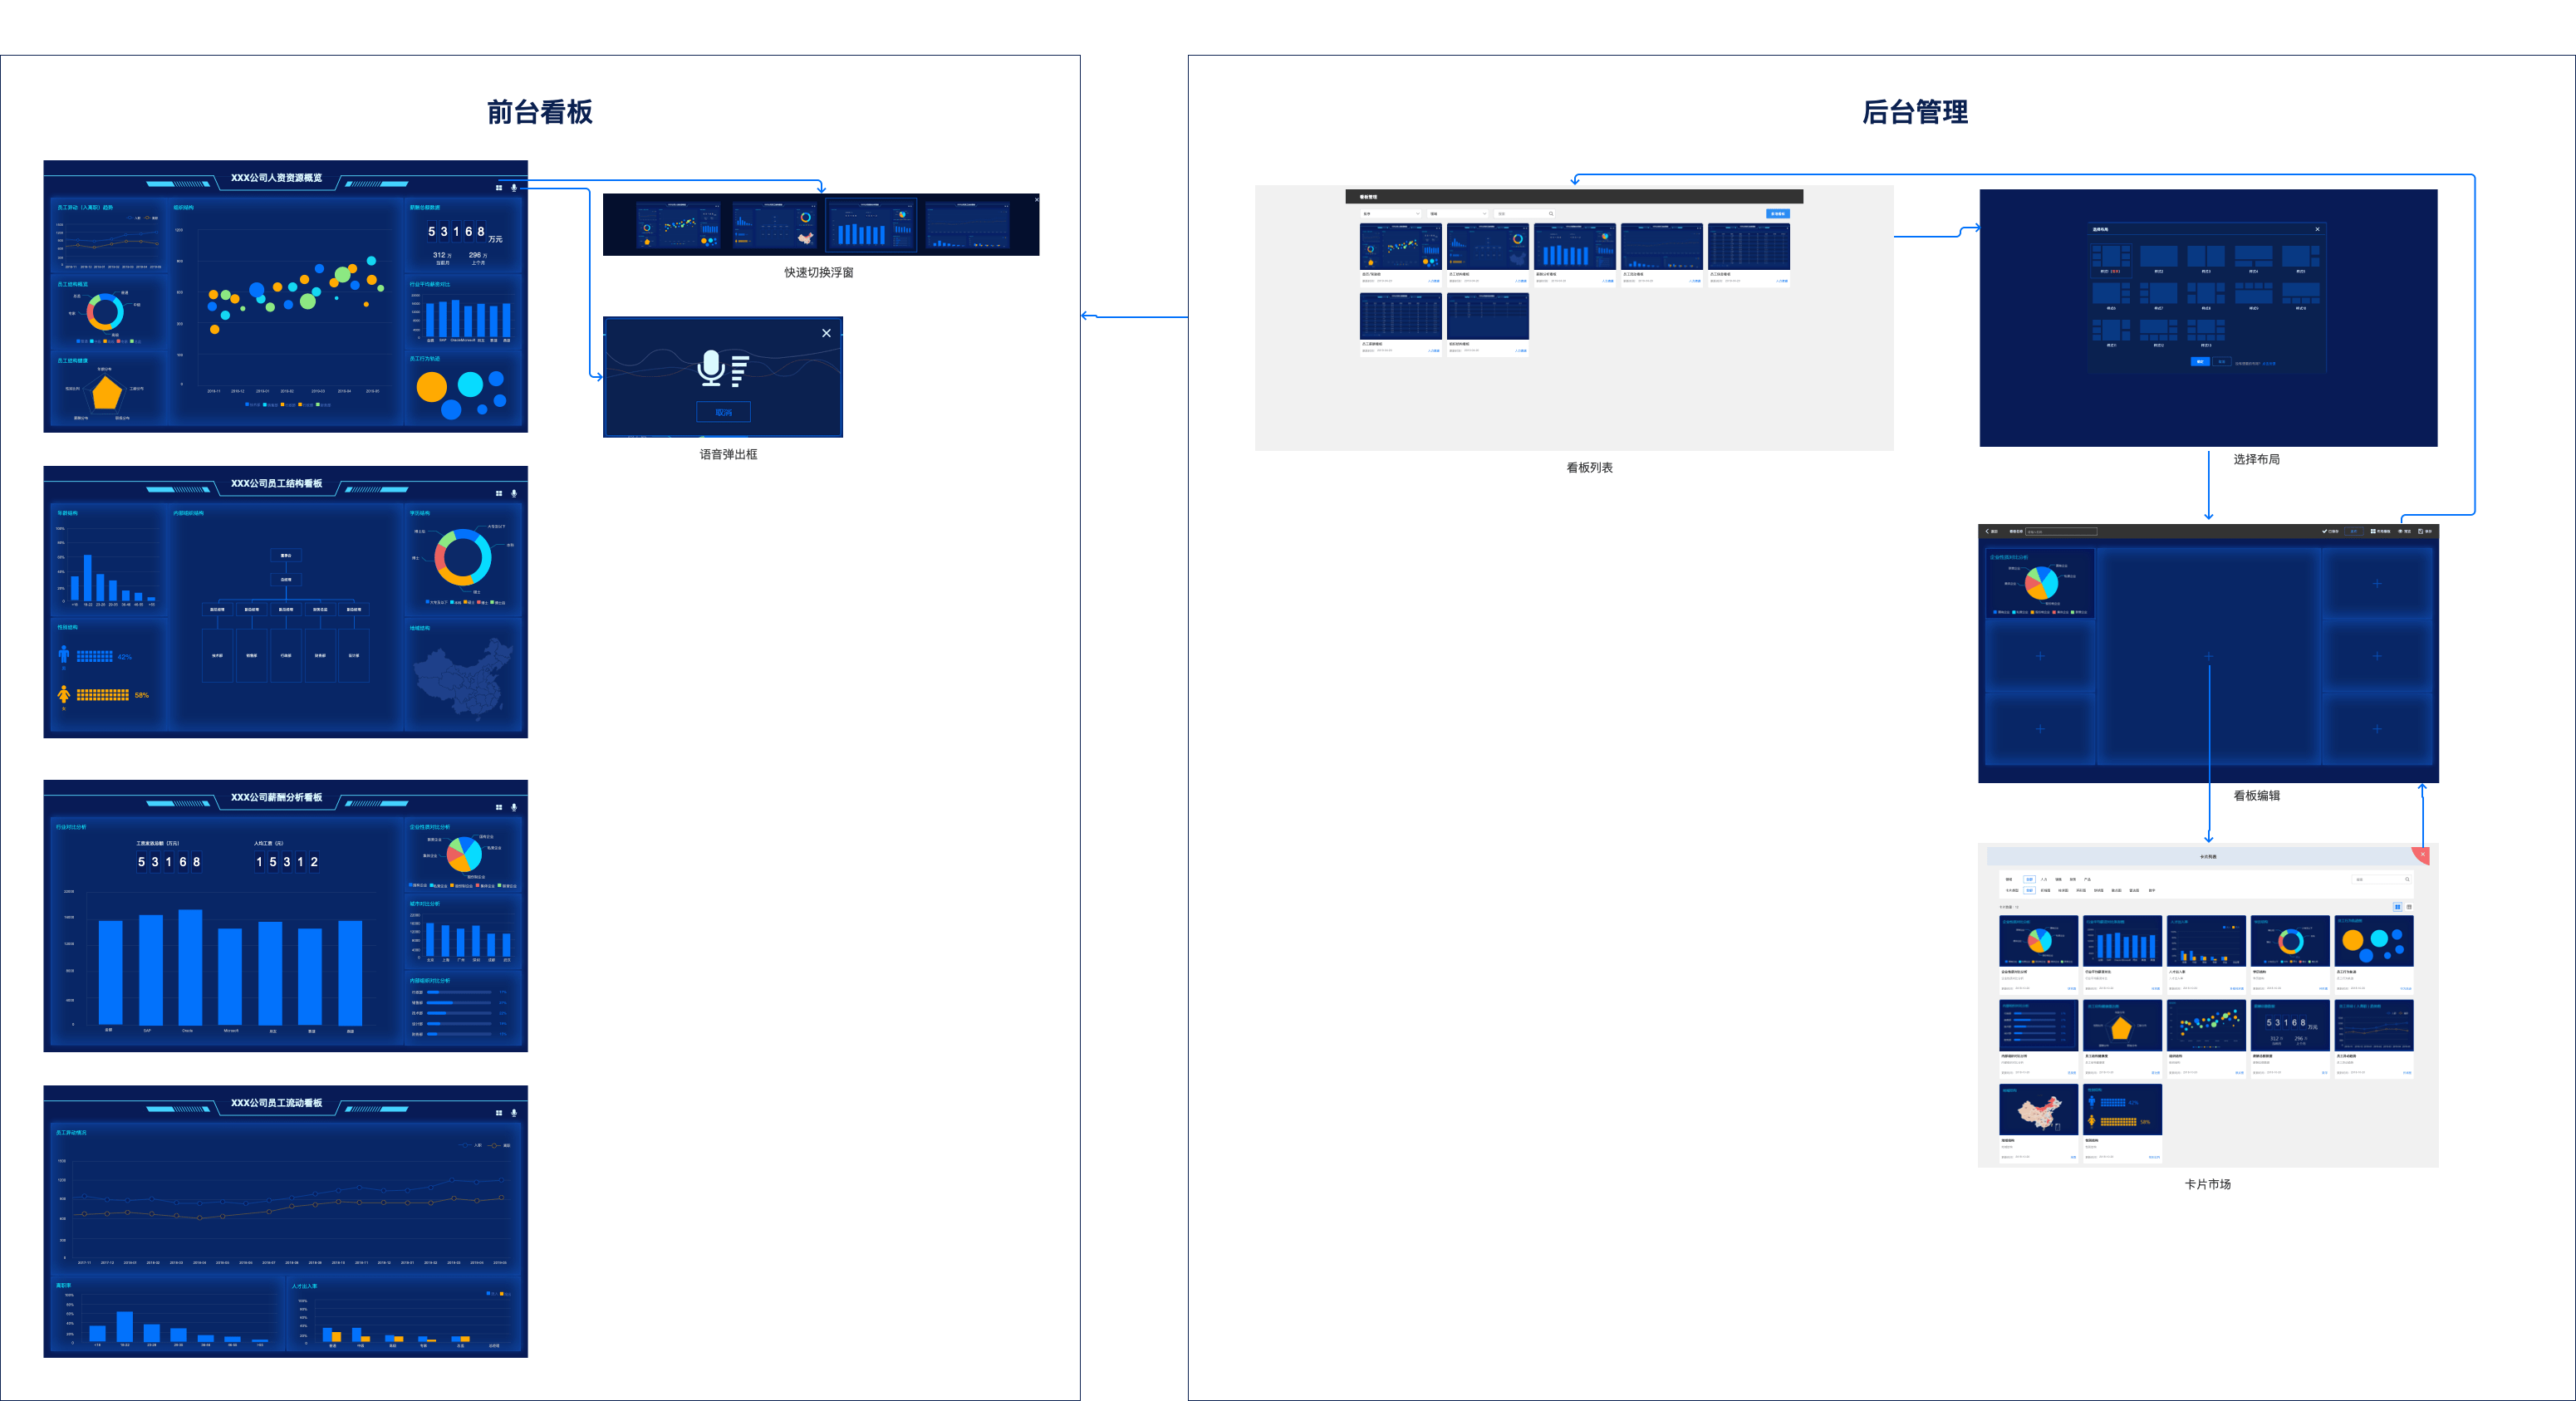 bi大屏可视化看板axurerp原型